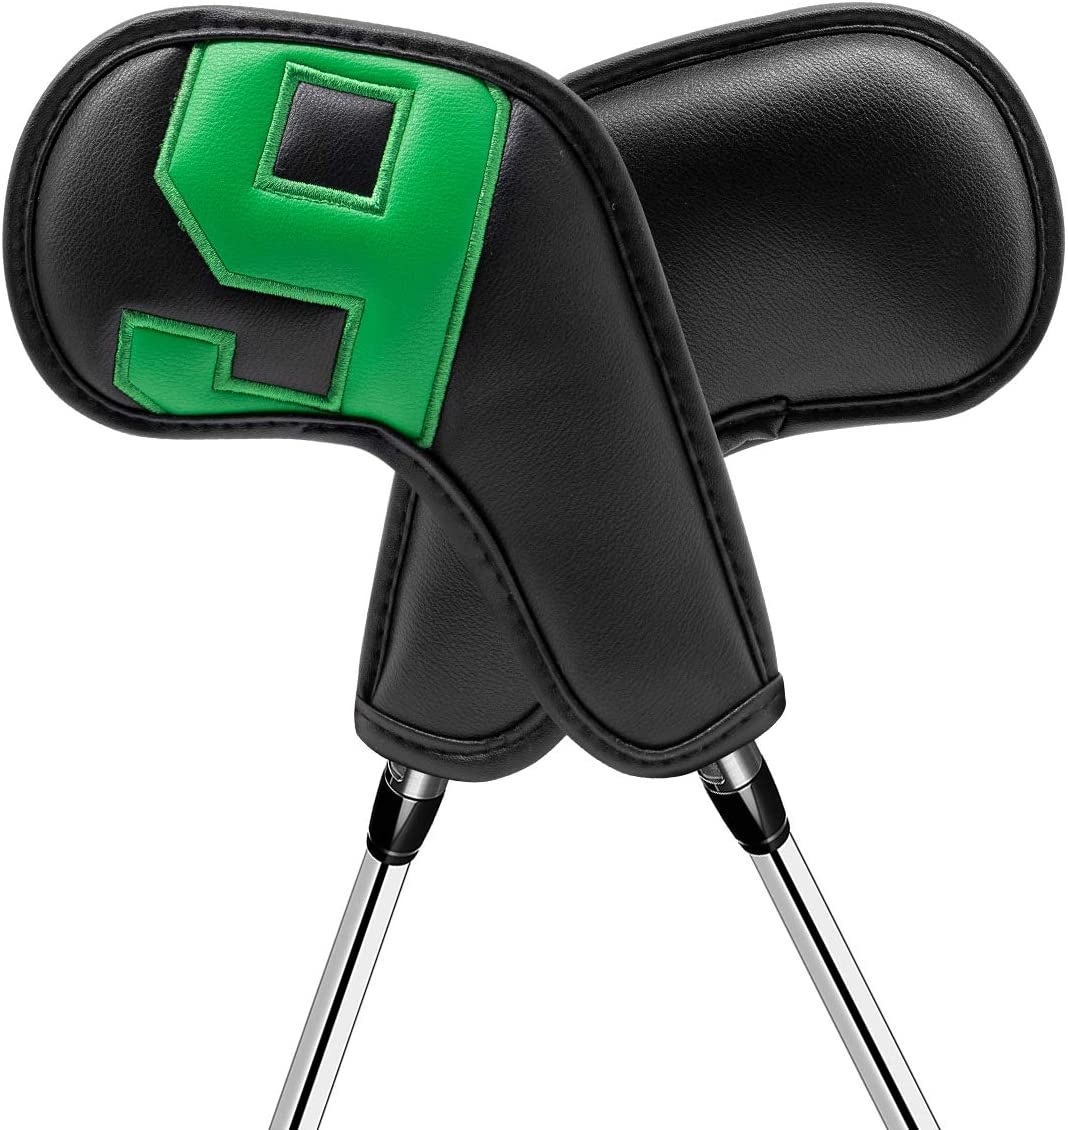 GolfBasic Prime Golf Iron Covers (10pcs Set) Black